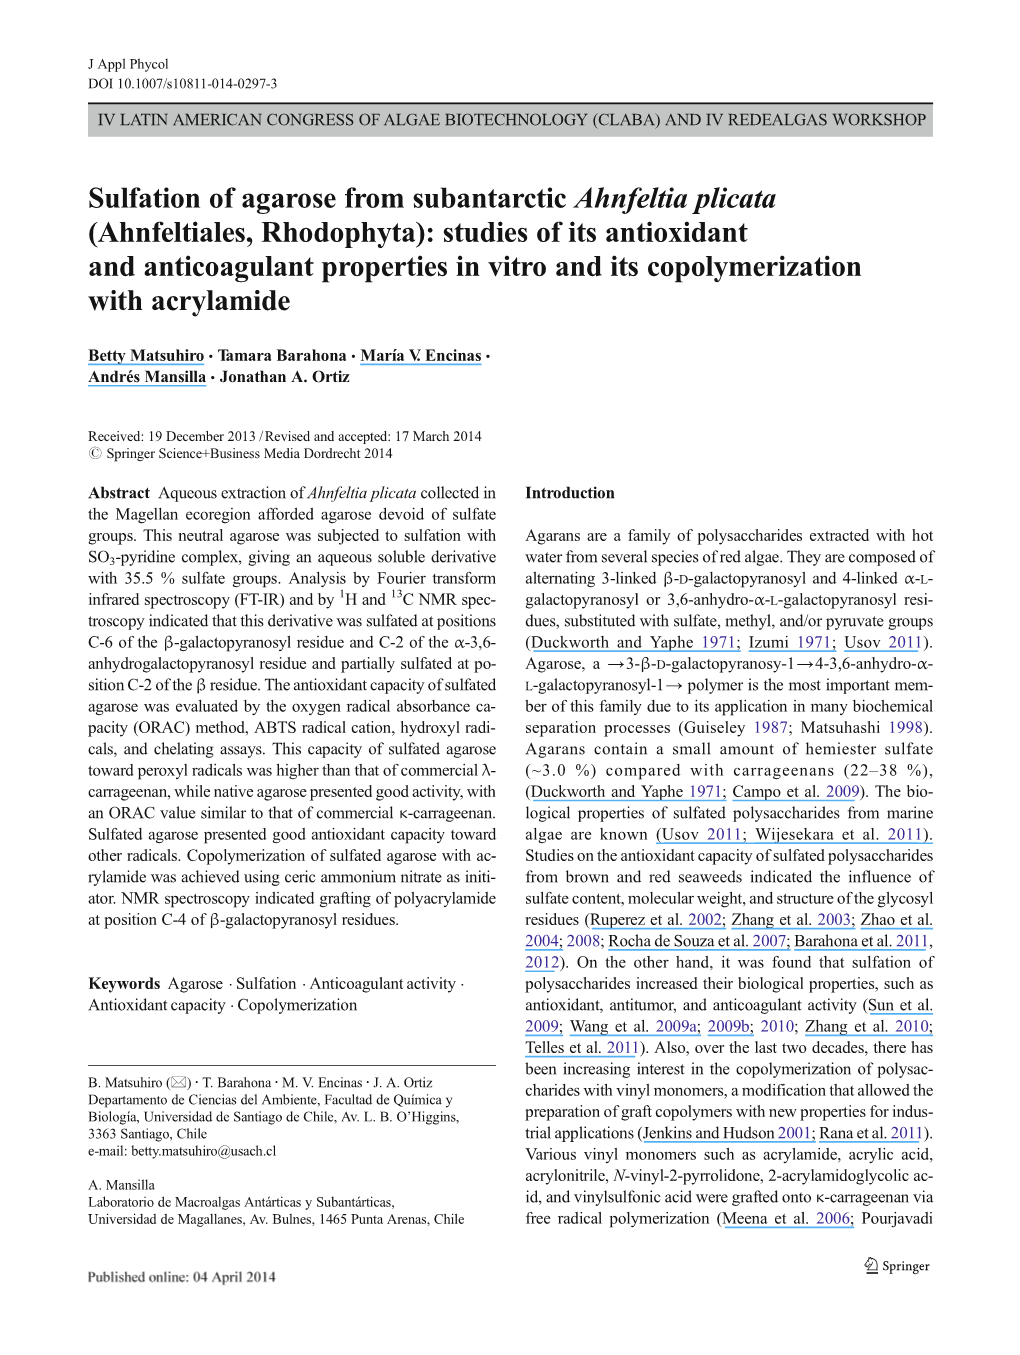 Sulfation of Agarose from Subantarctic Ahnfeltia Plicata (Ahnfeltiales, Rhodophyta): Studies of Its Antioxidant and Anticoagulan